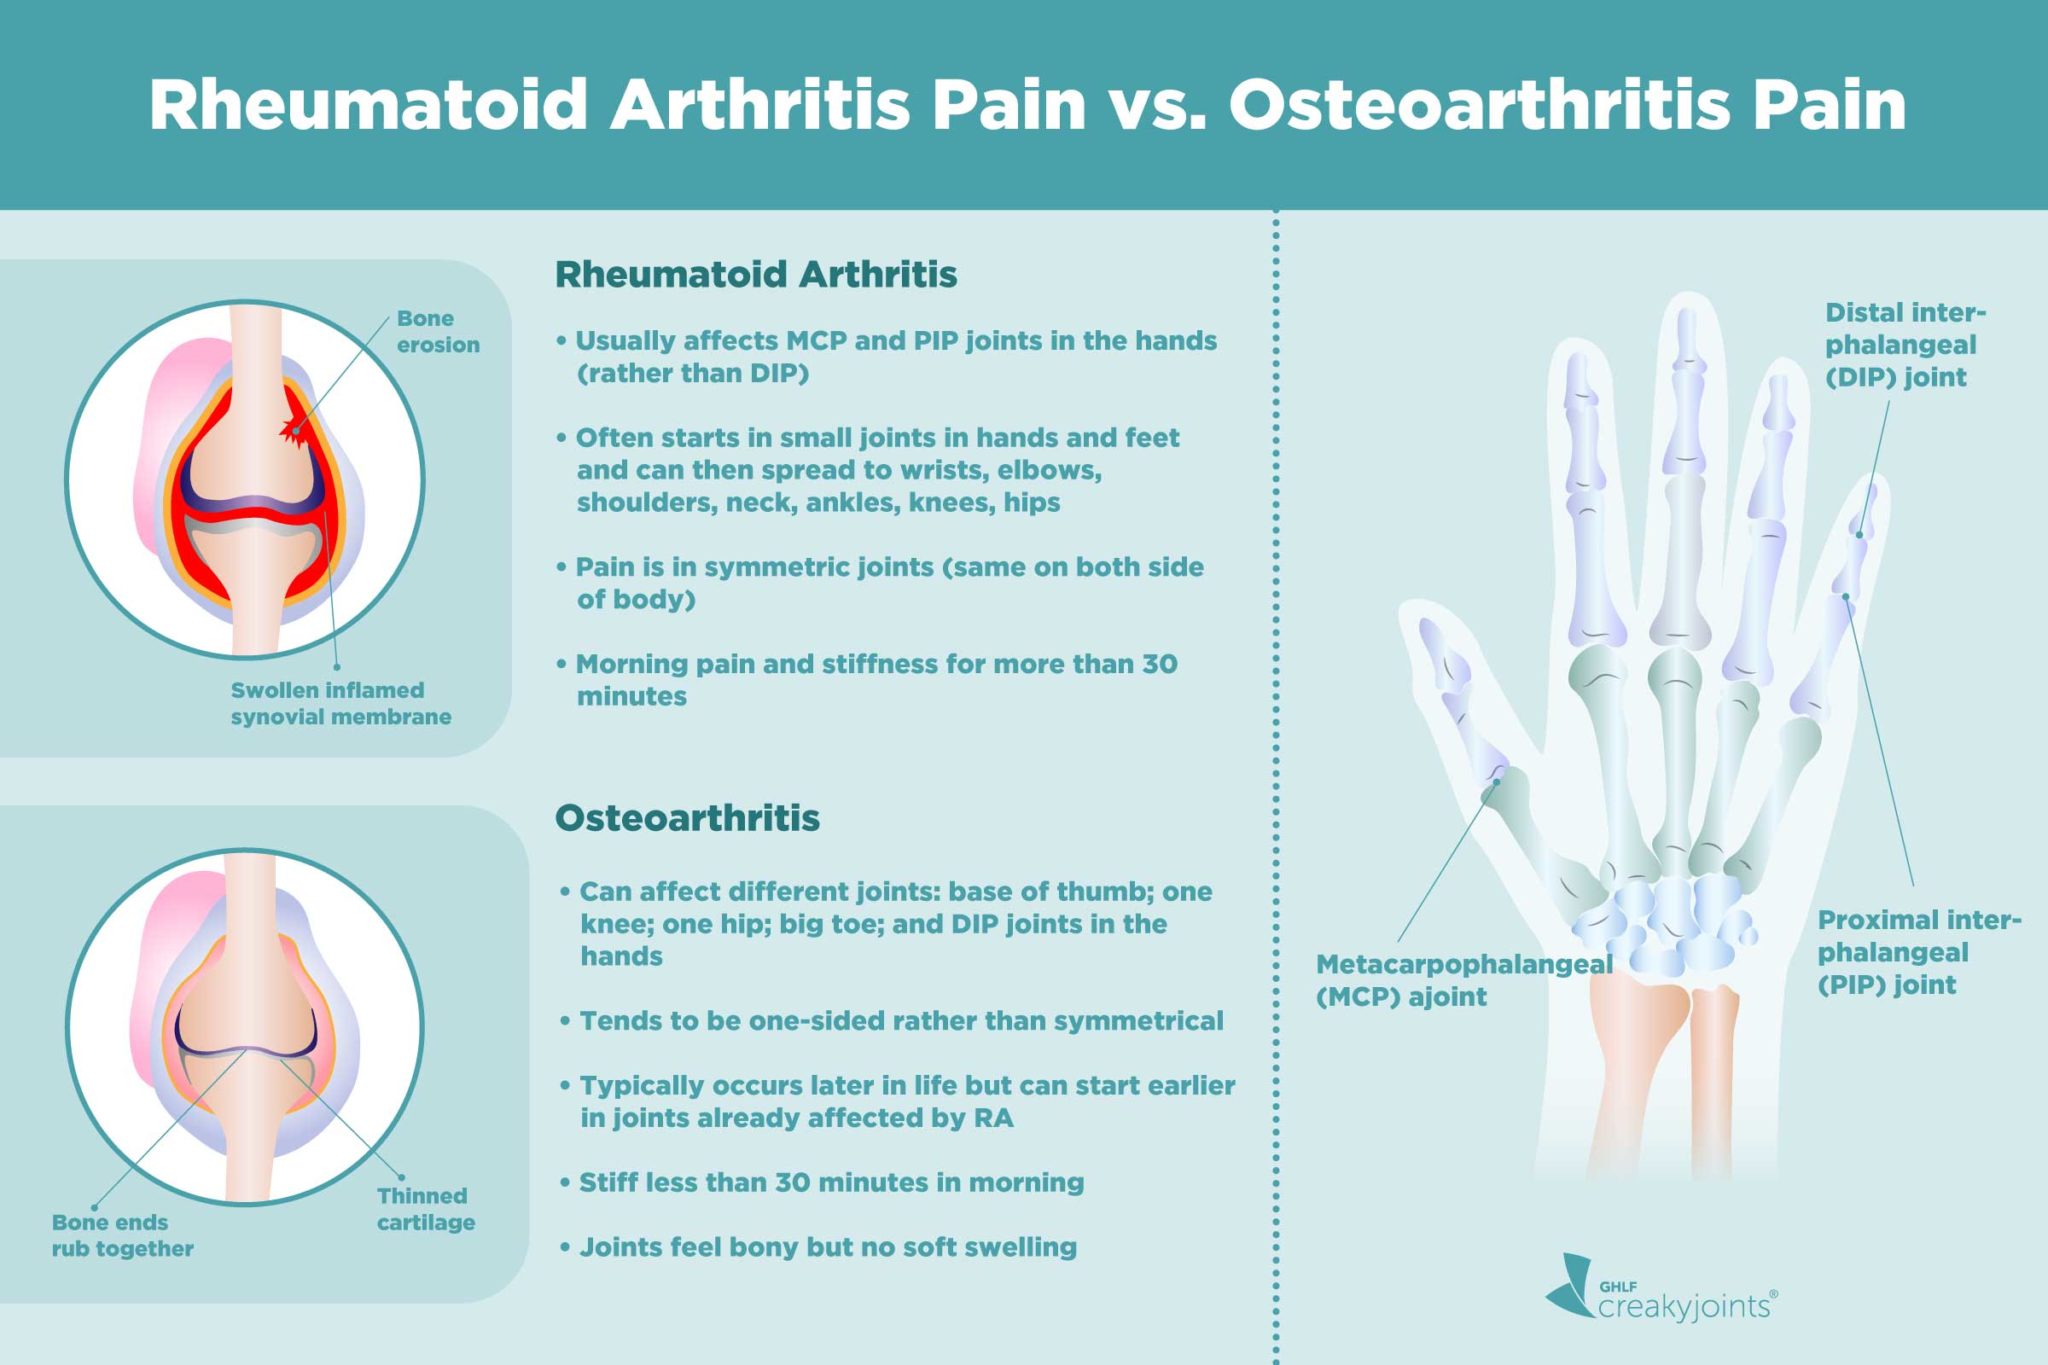 Healthline: How Does Stress Affect Rheumatoid Arthritis?